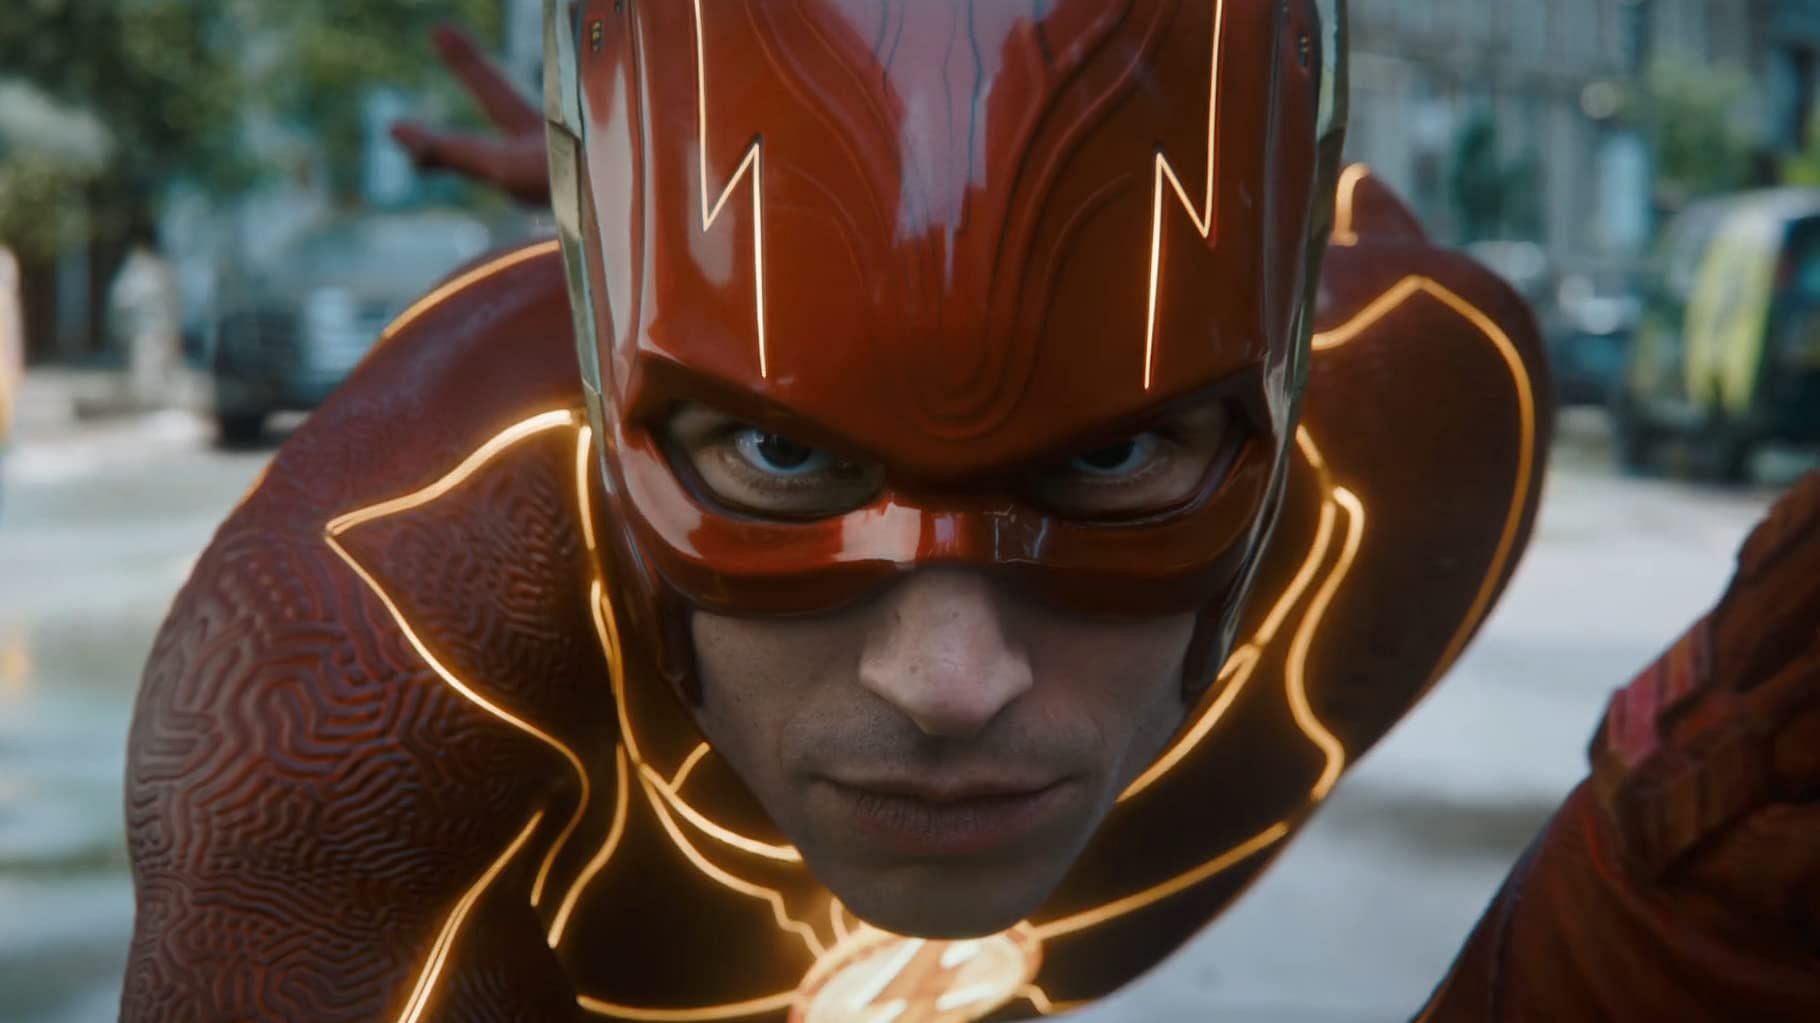 The Flash: Zooming towards success - Critics praise the DC movie (Image via DC Studios)